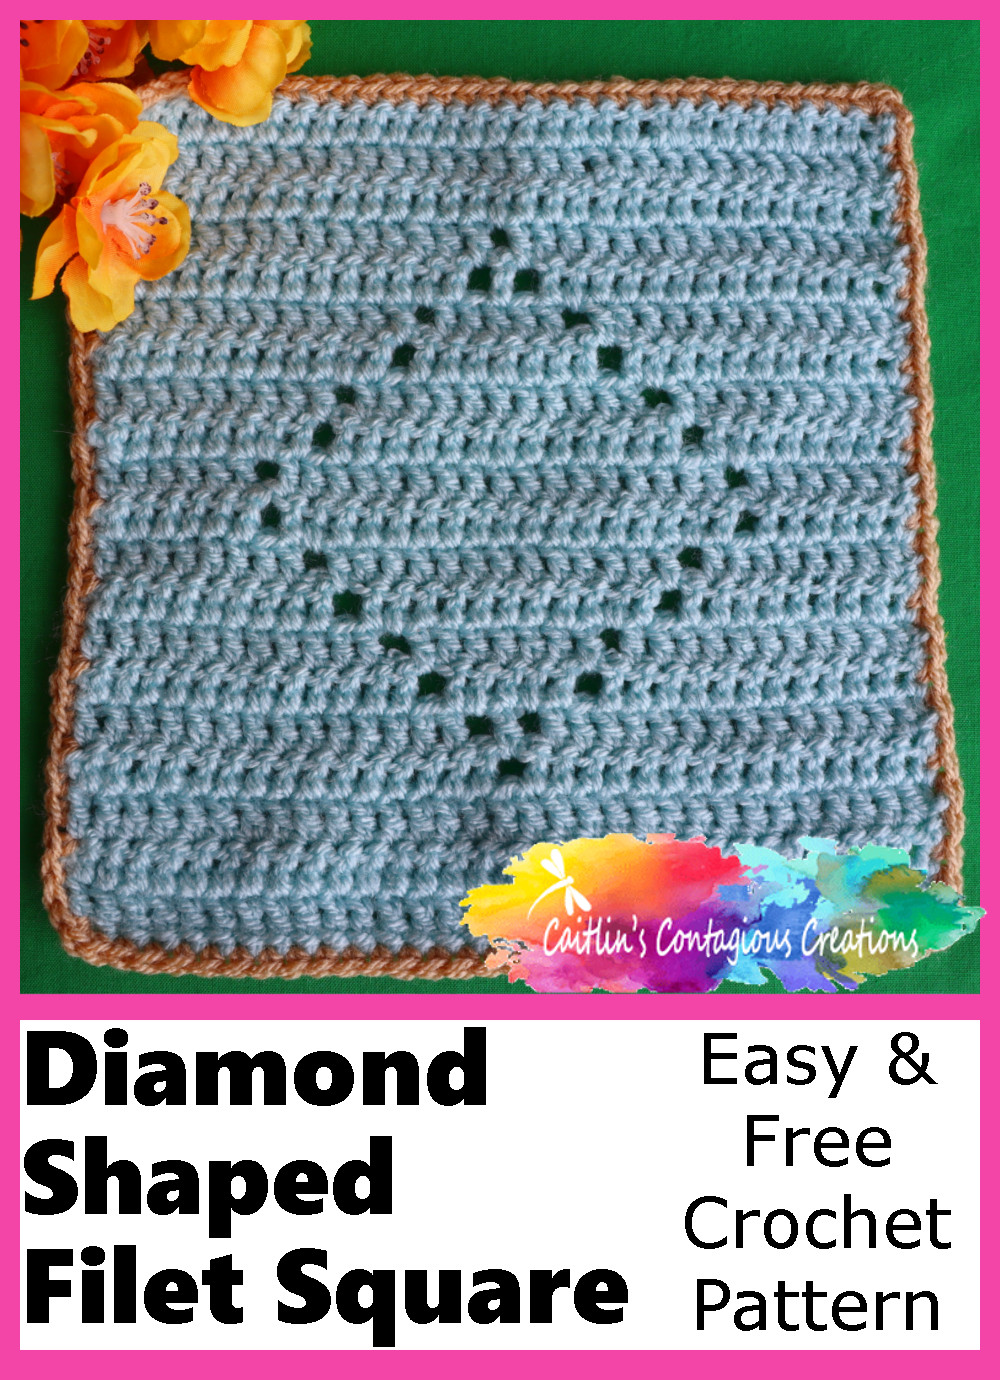 Diamond Shape Filet Square Crochet Pattern finished project on green background